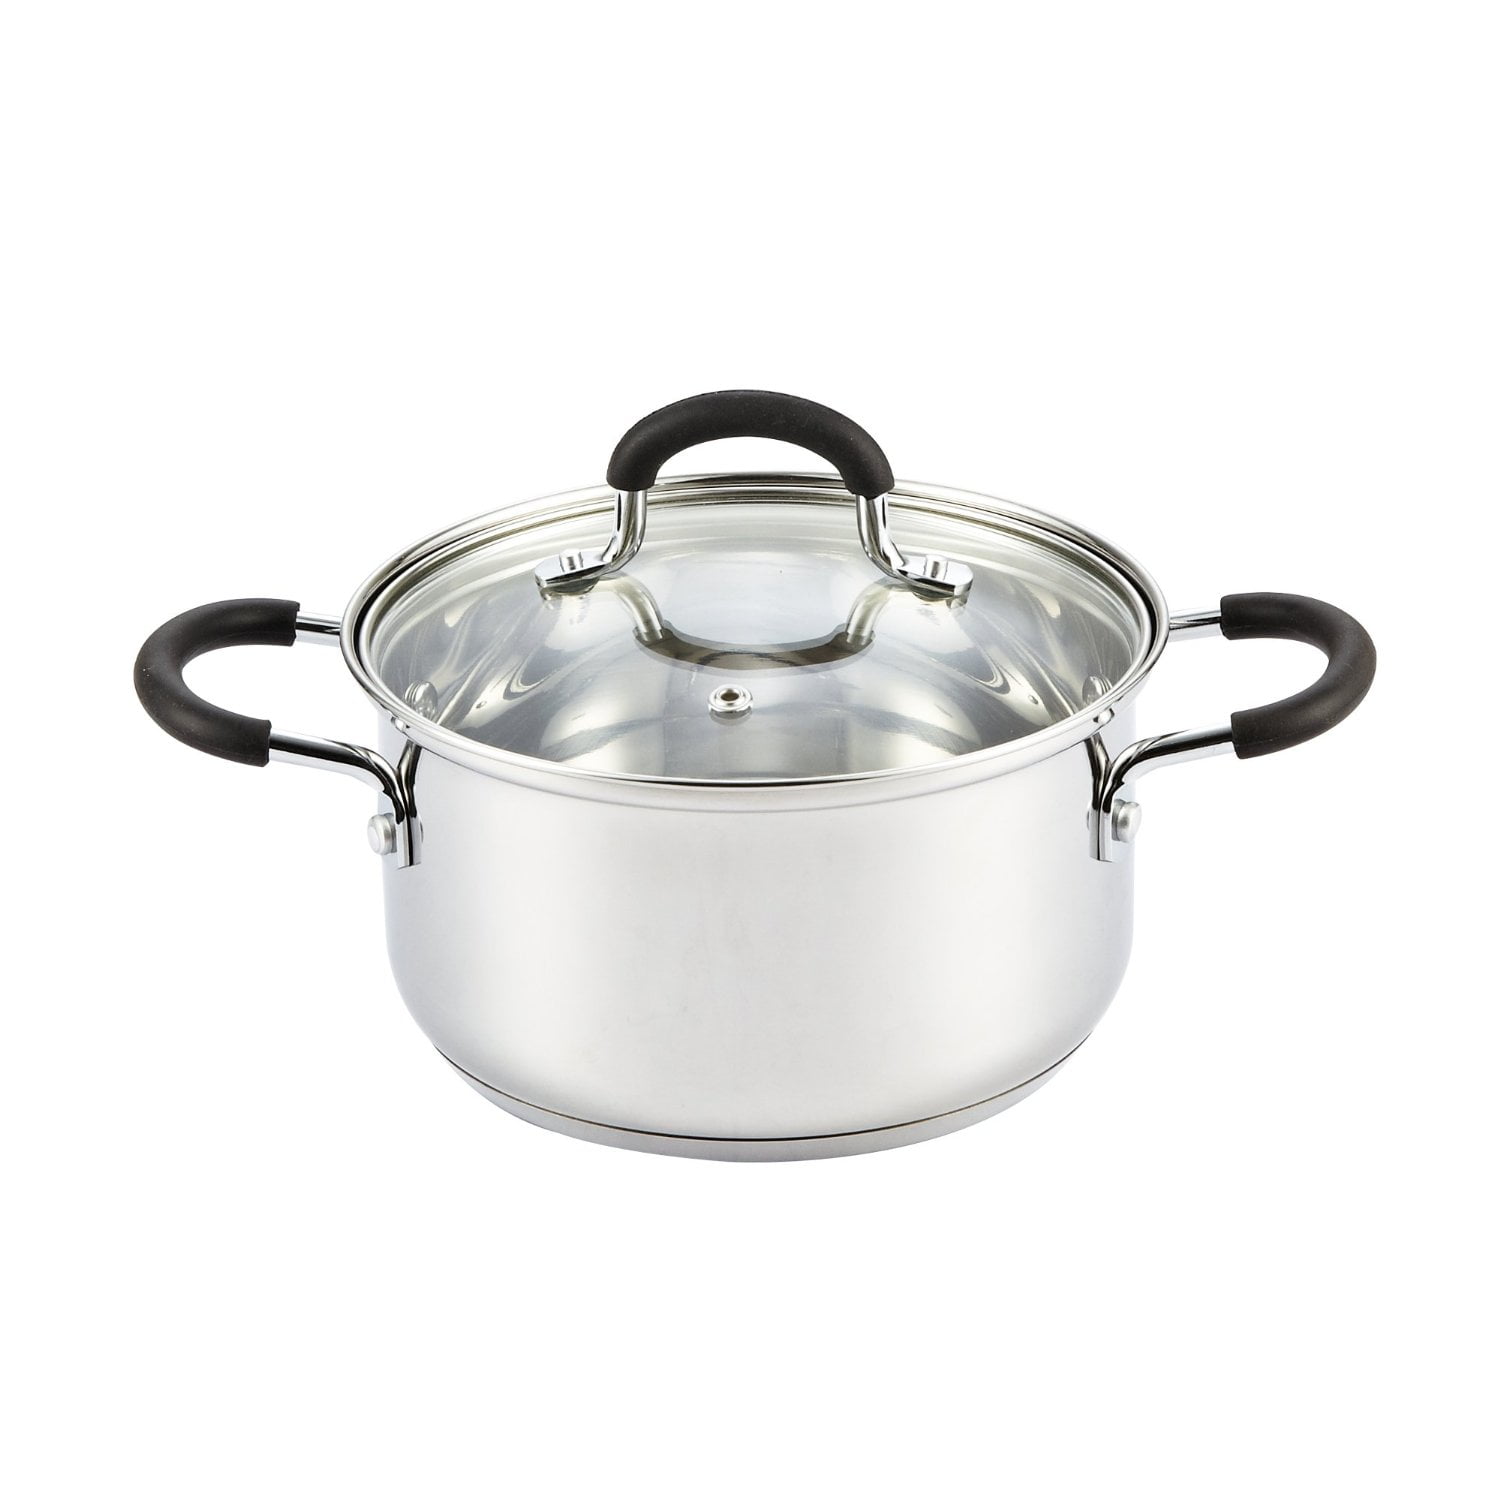 Cook N Home Professional Stainless Steel 8 Quart Stockpot Sauce Pot, 8 quart  - Kroger